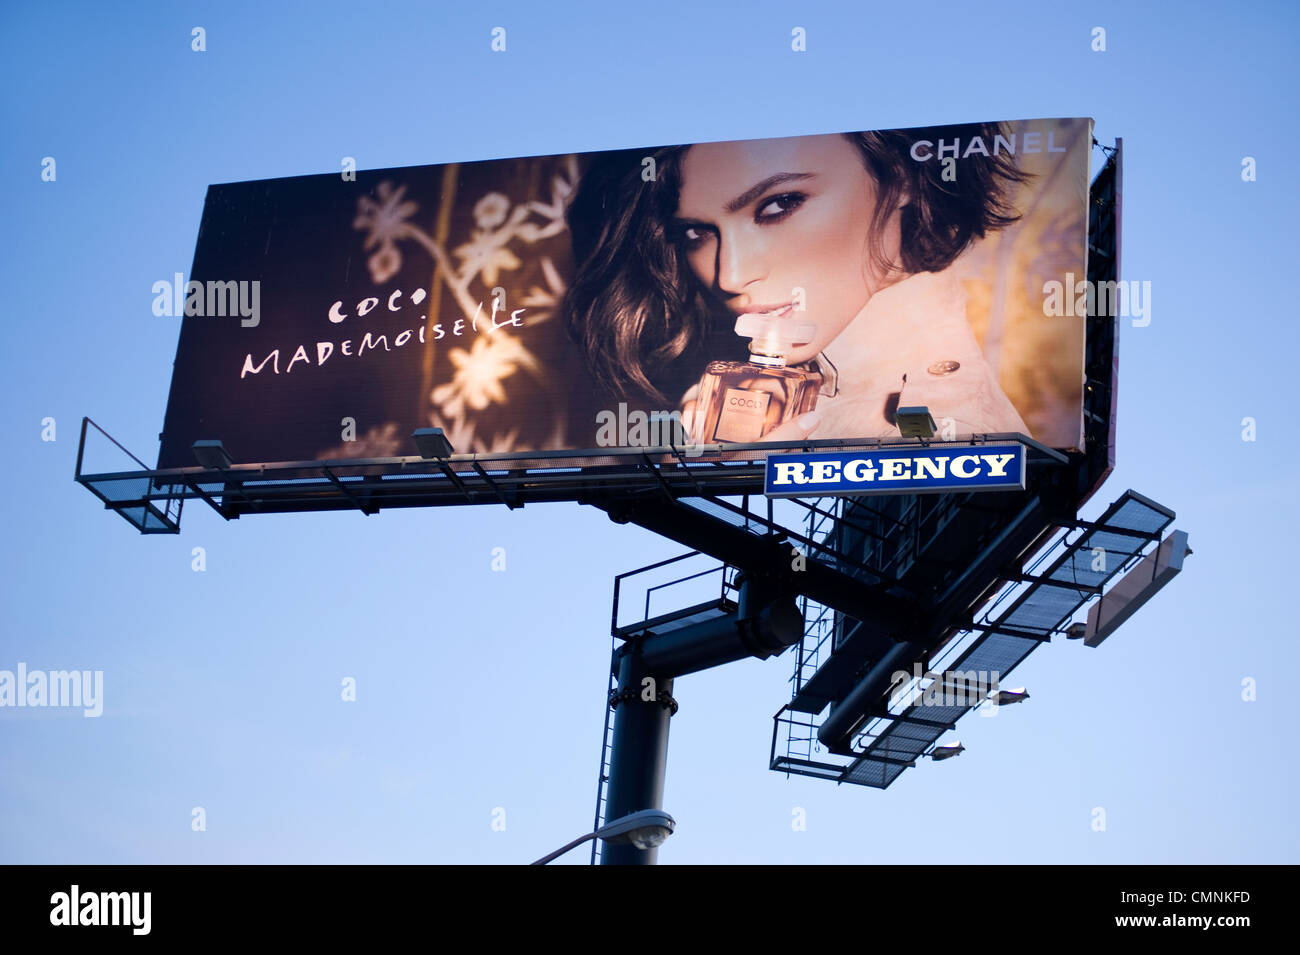 Billboard advertising Chanel perfume Stock Photo